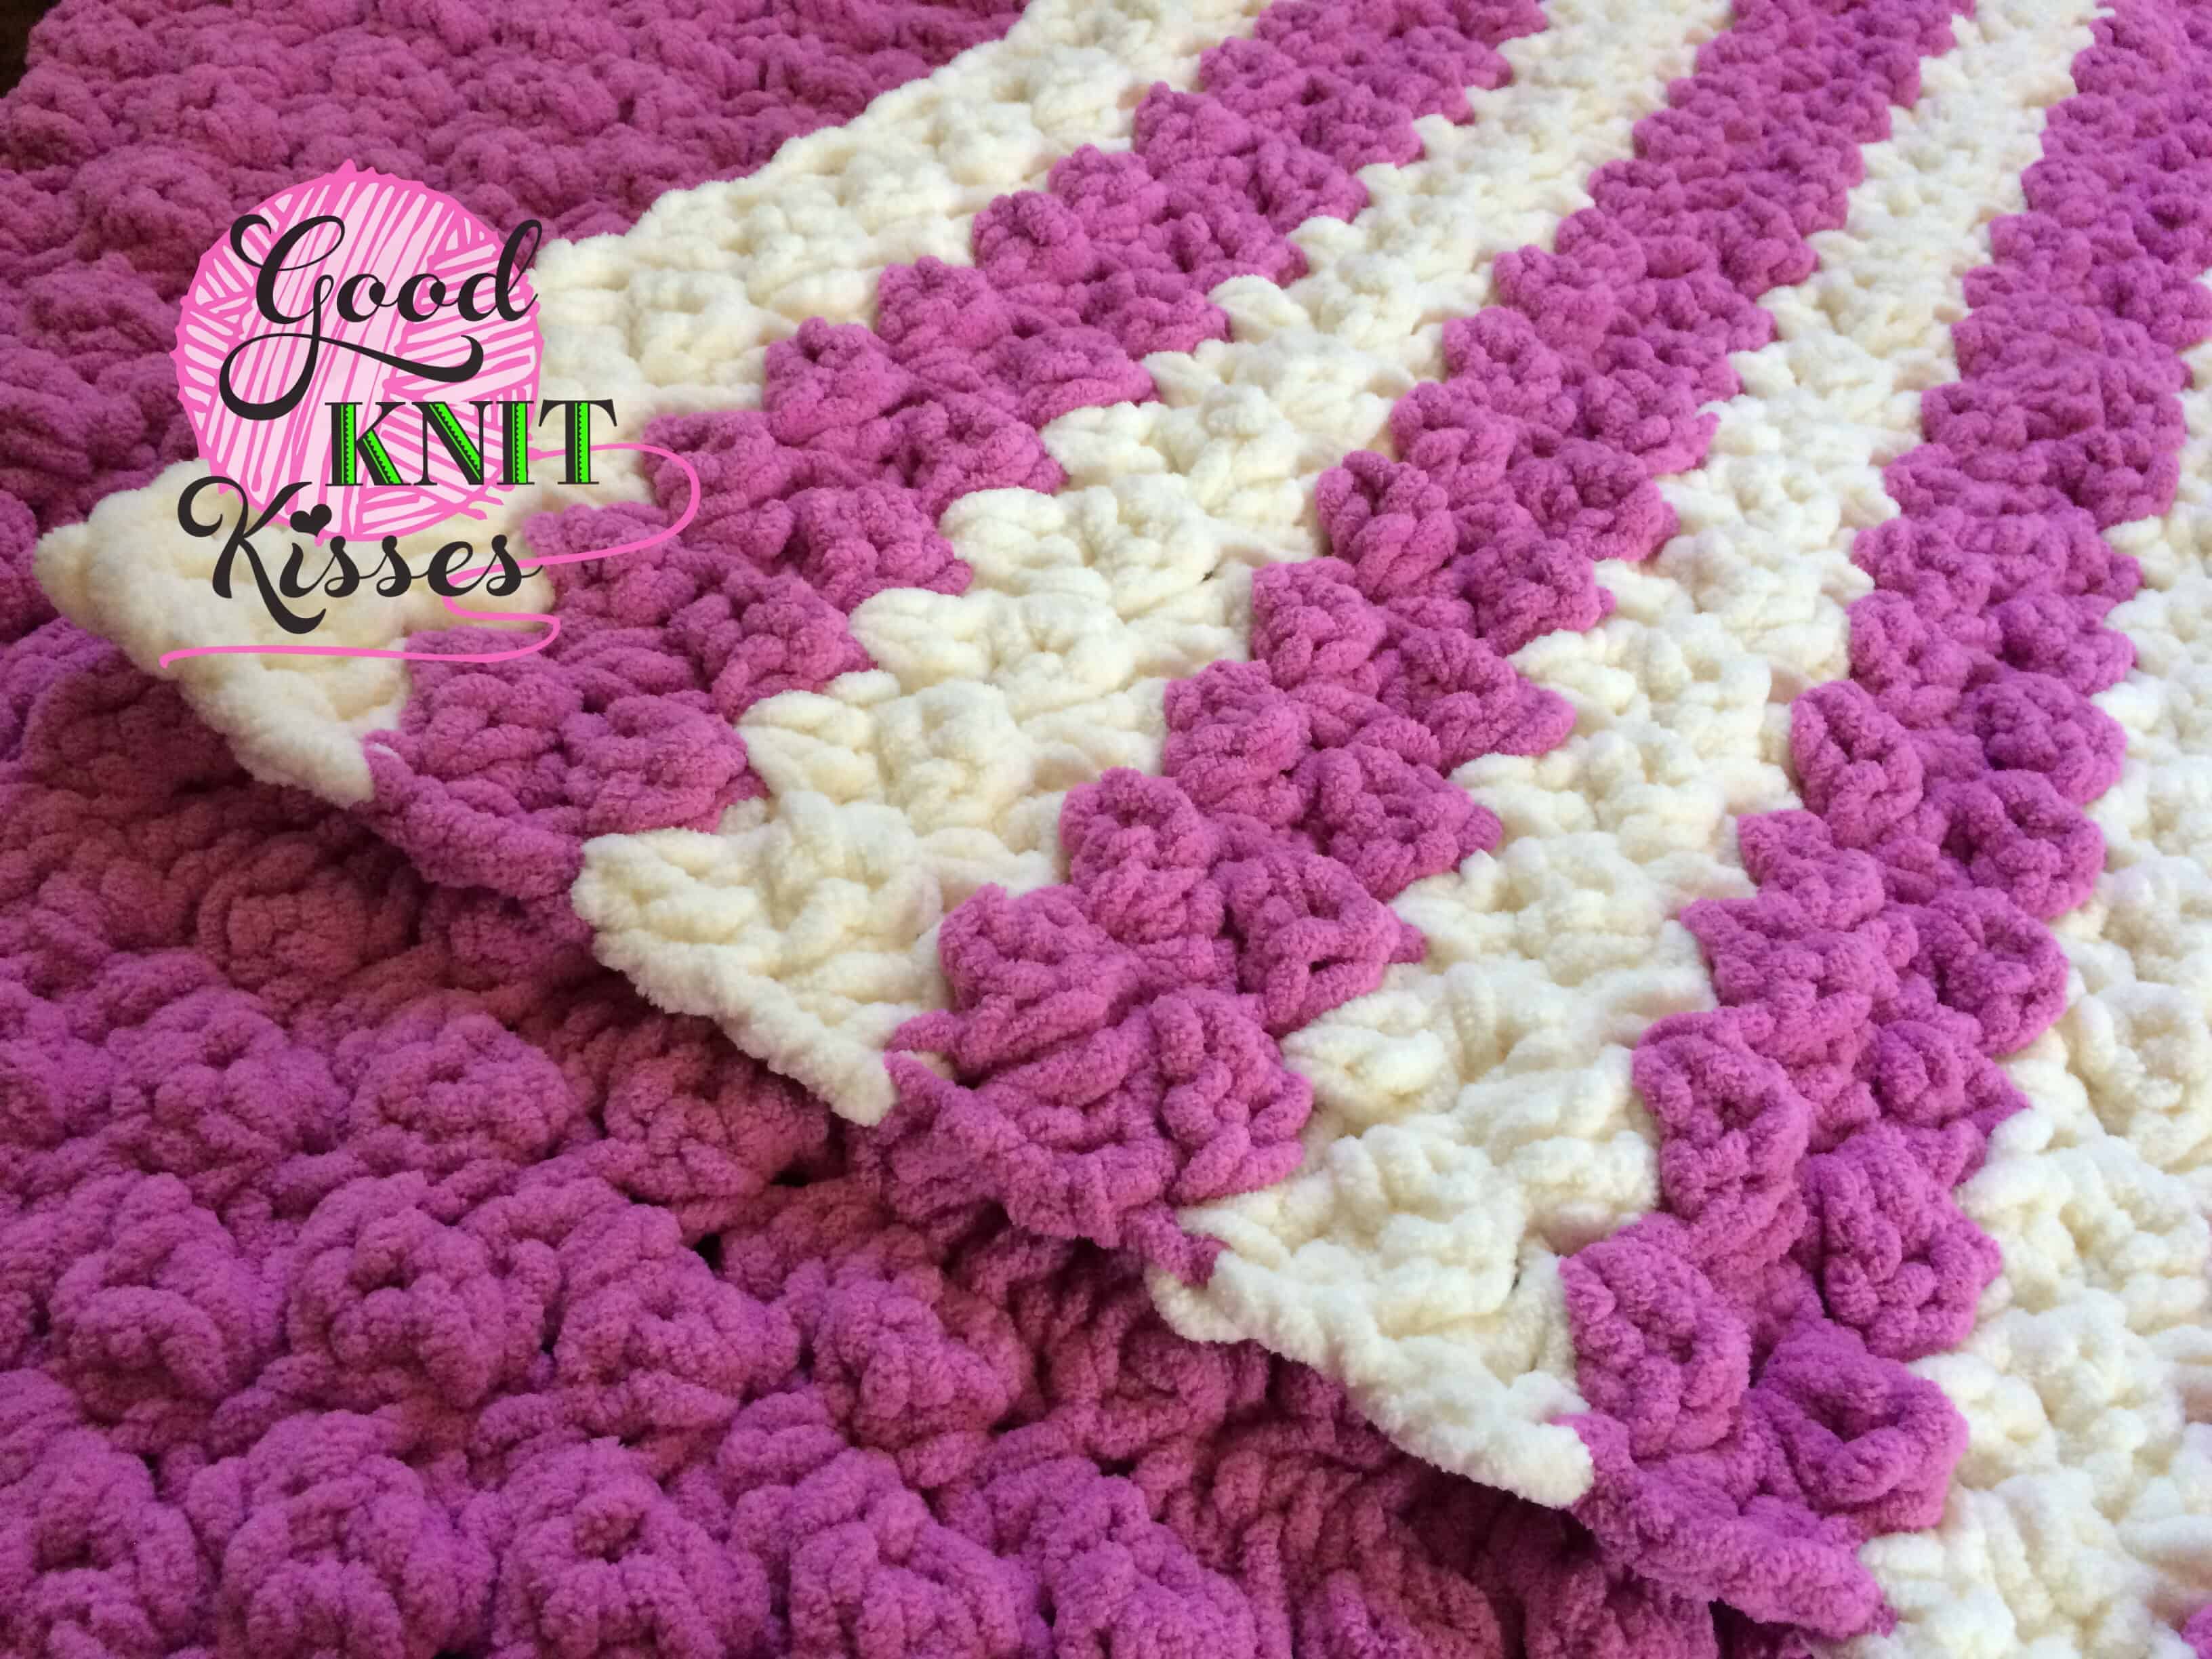 Baby Blanket Yarn Guide  Bernat Baby Blanket Yarn For Crochet